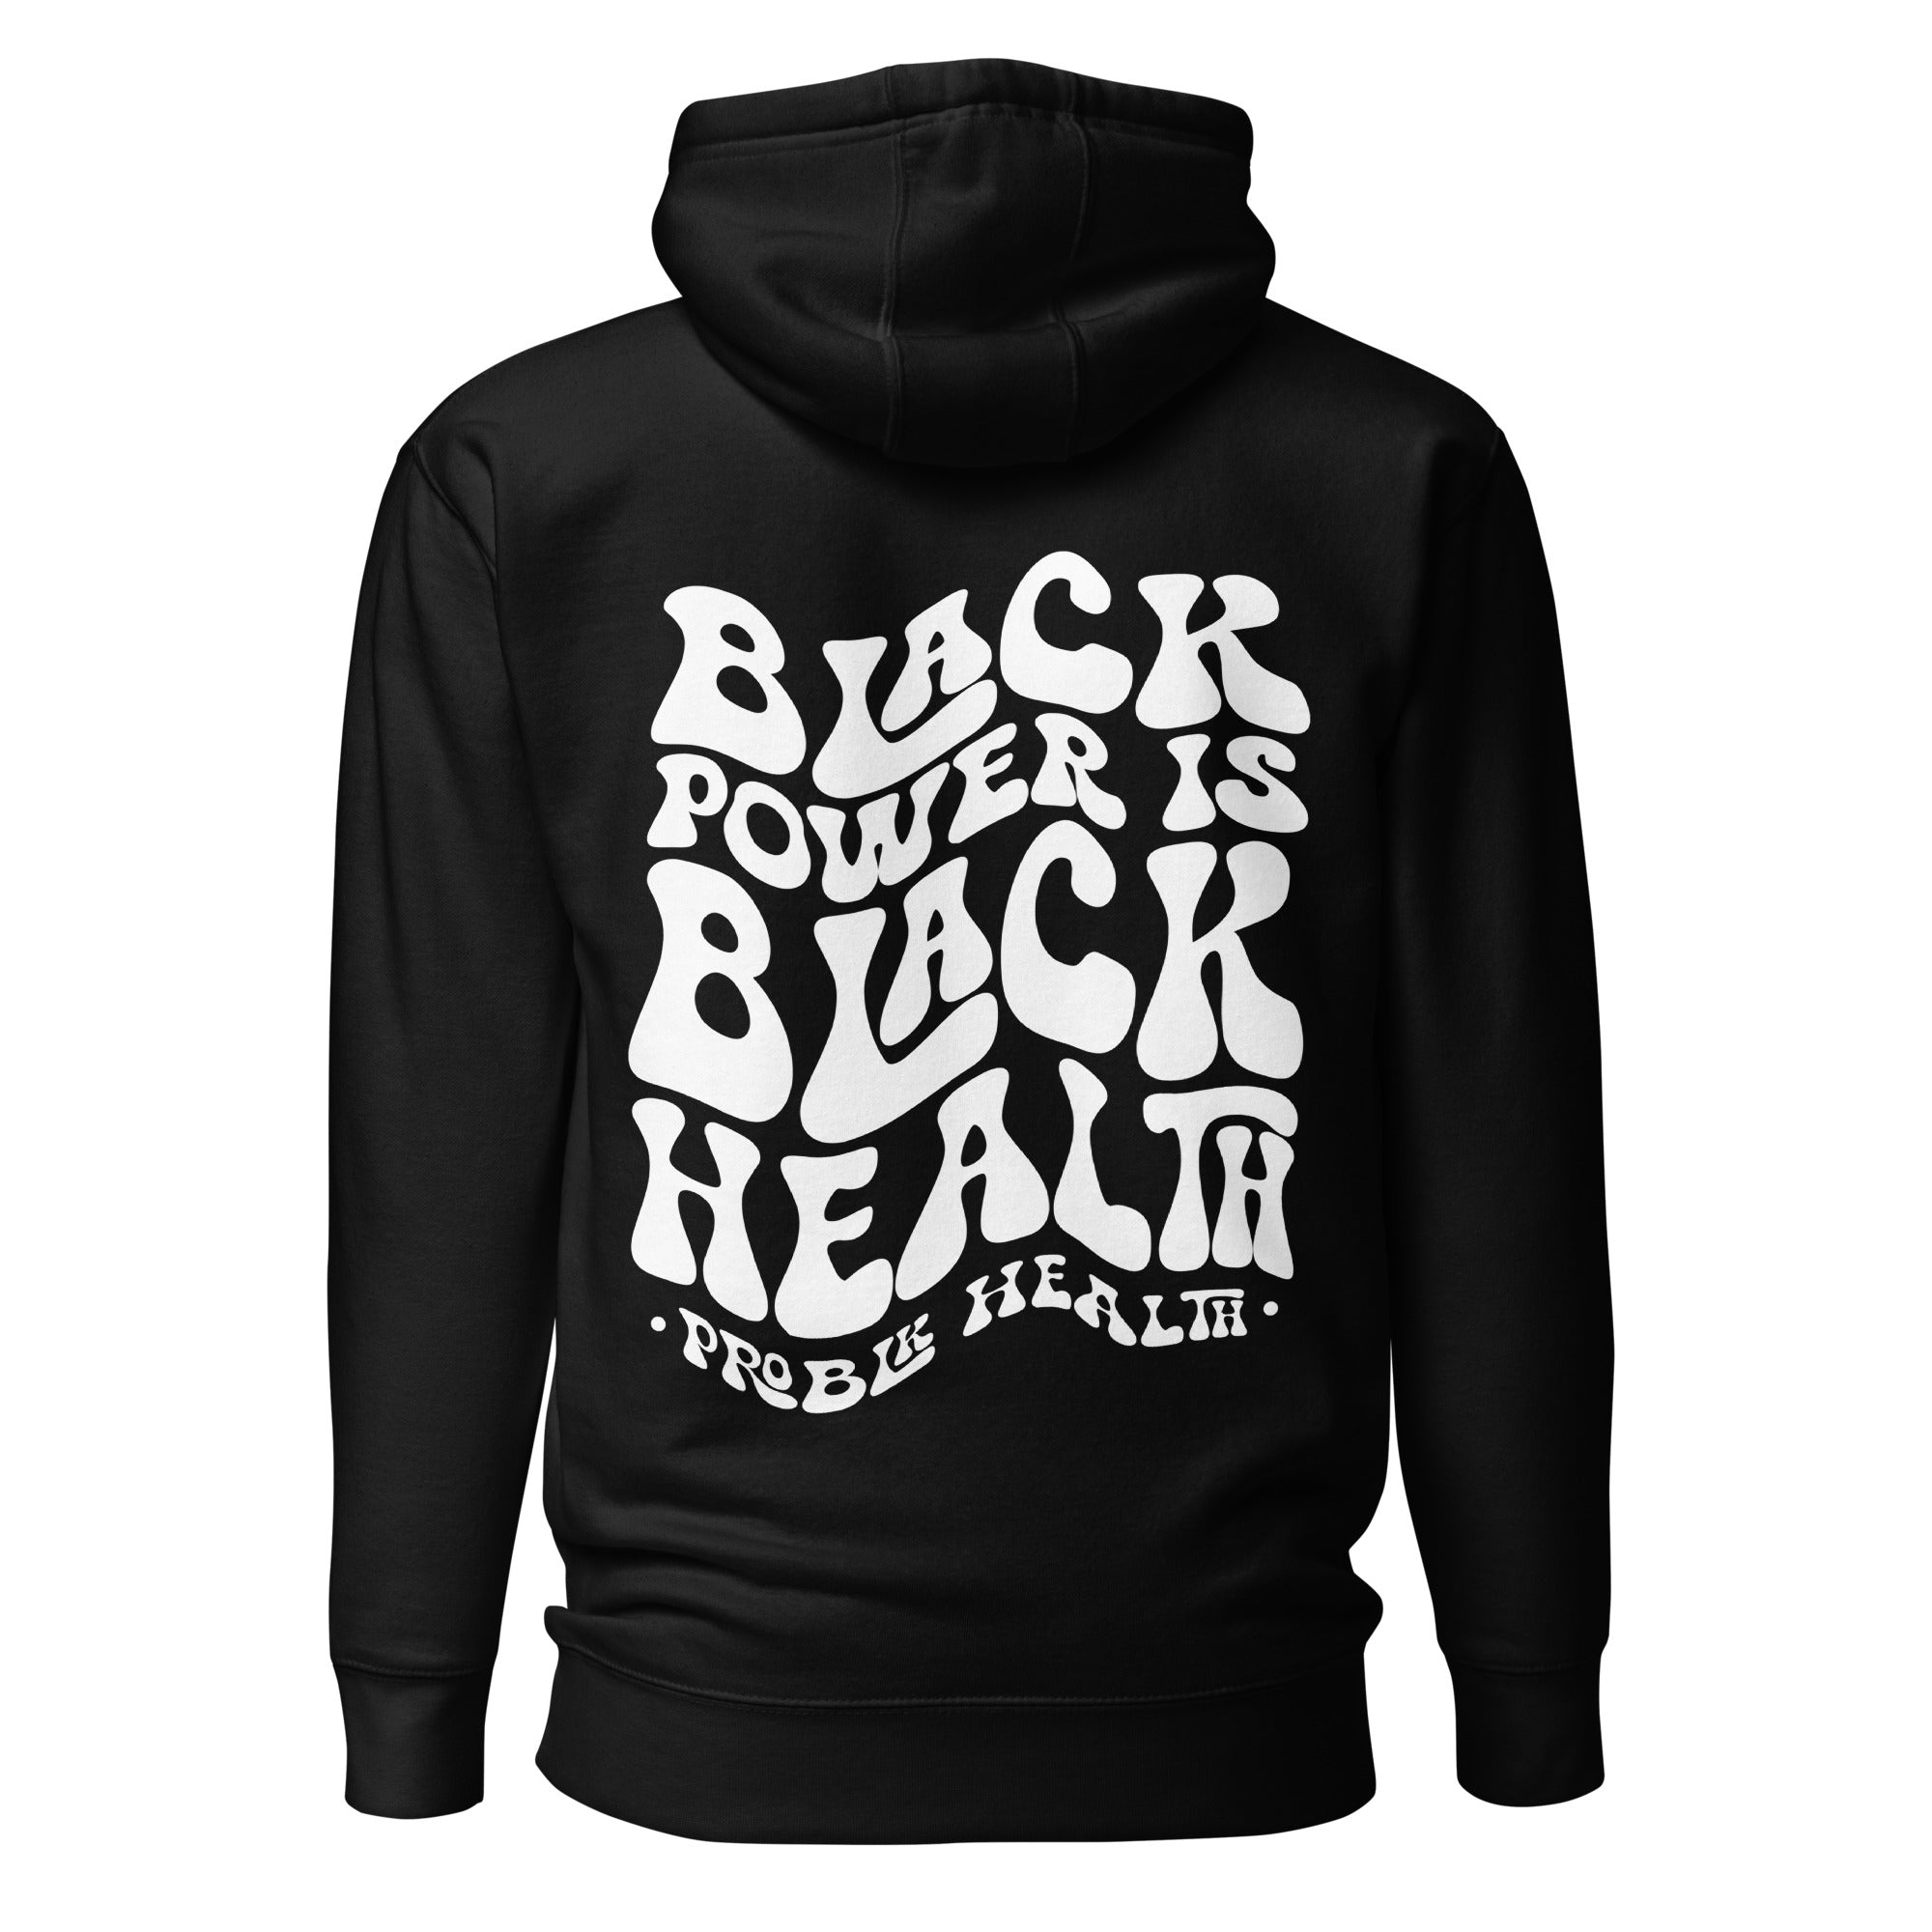 "BLACK HEALTH POWER" Black Unisex Premium Hoodie (front&back design)